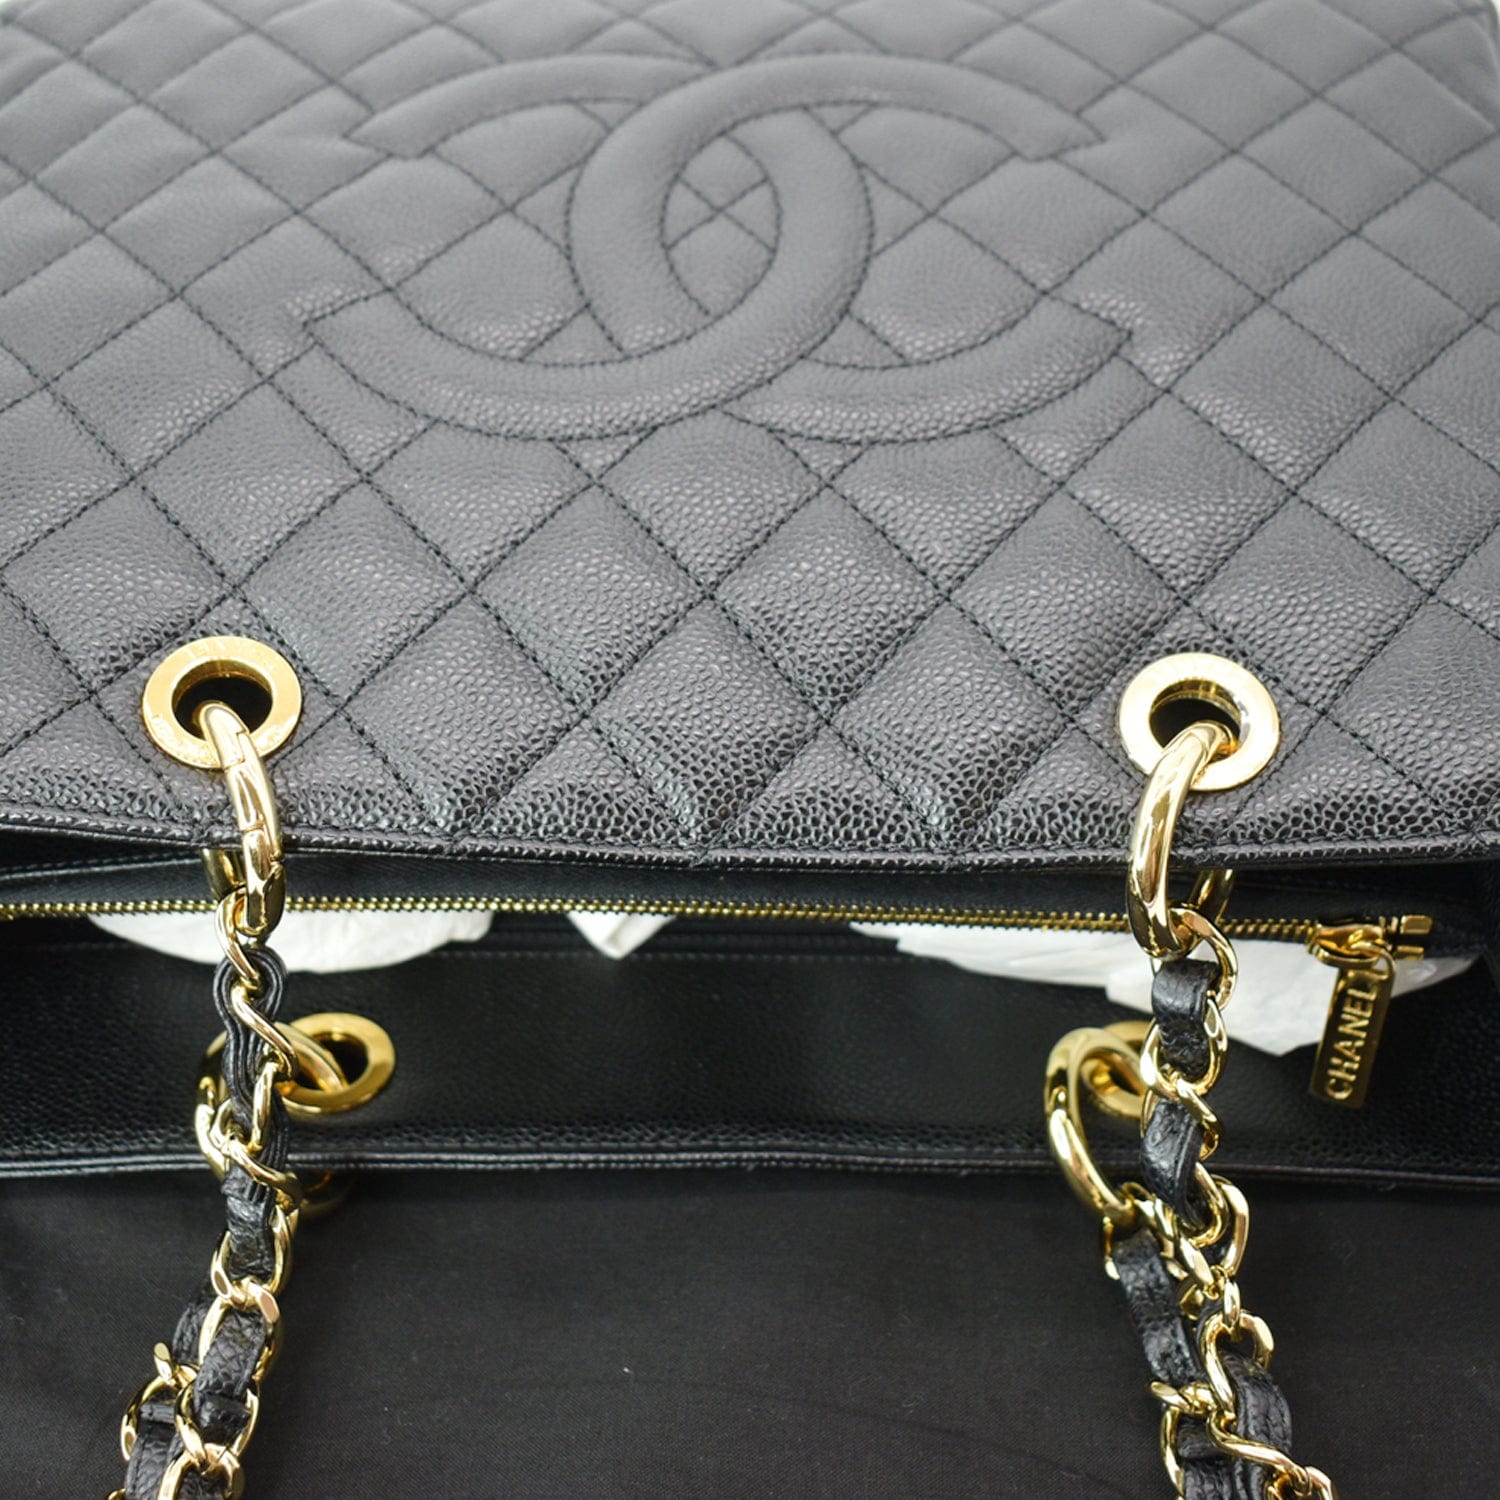 NEW Chanel GST Grand Shopping Tote Bag 100% Genuine Black Caviar